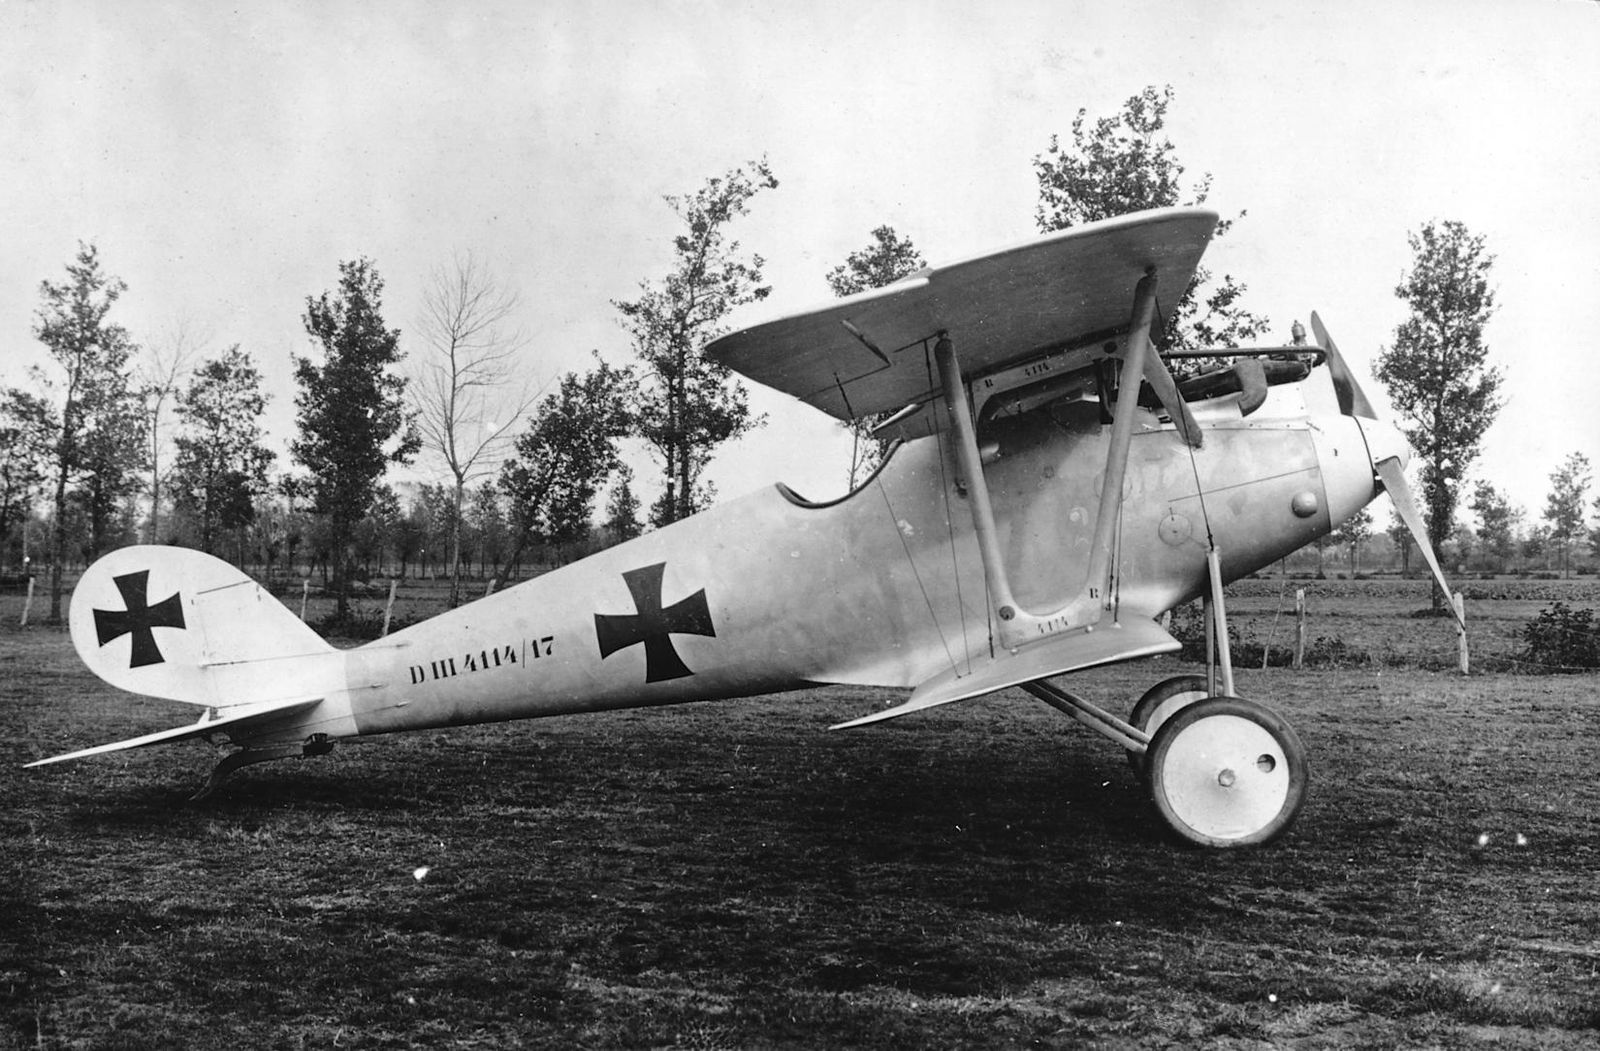 Pfalz D.III  no. 4114/17